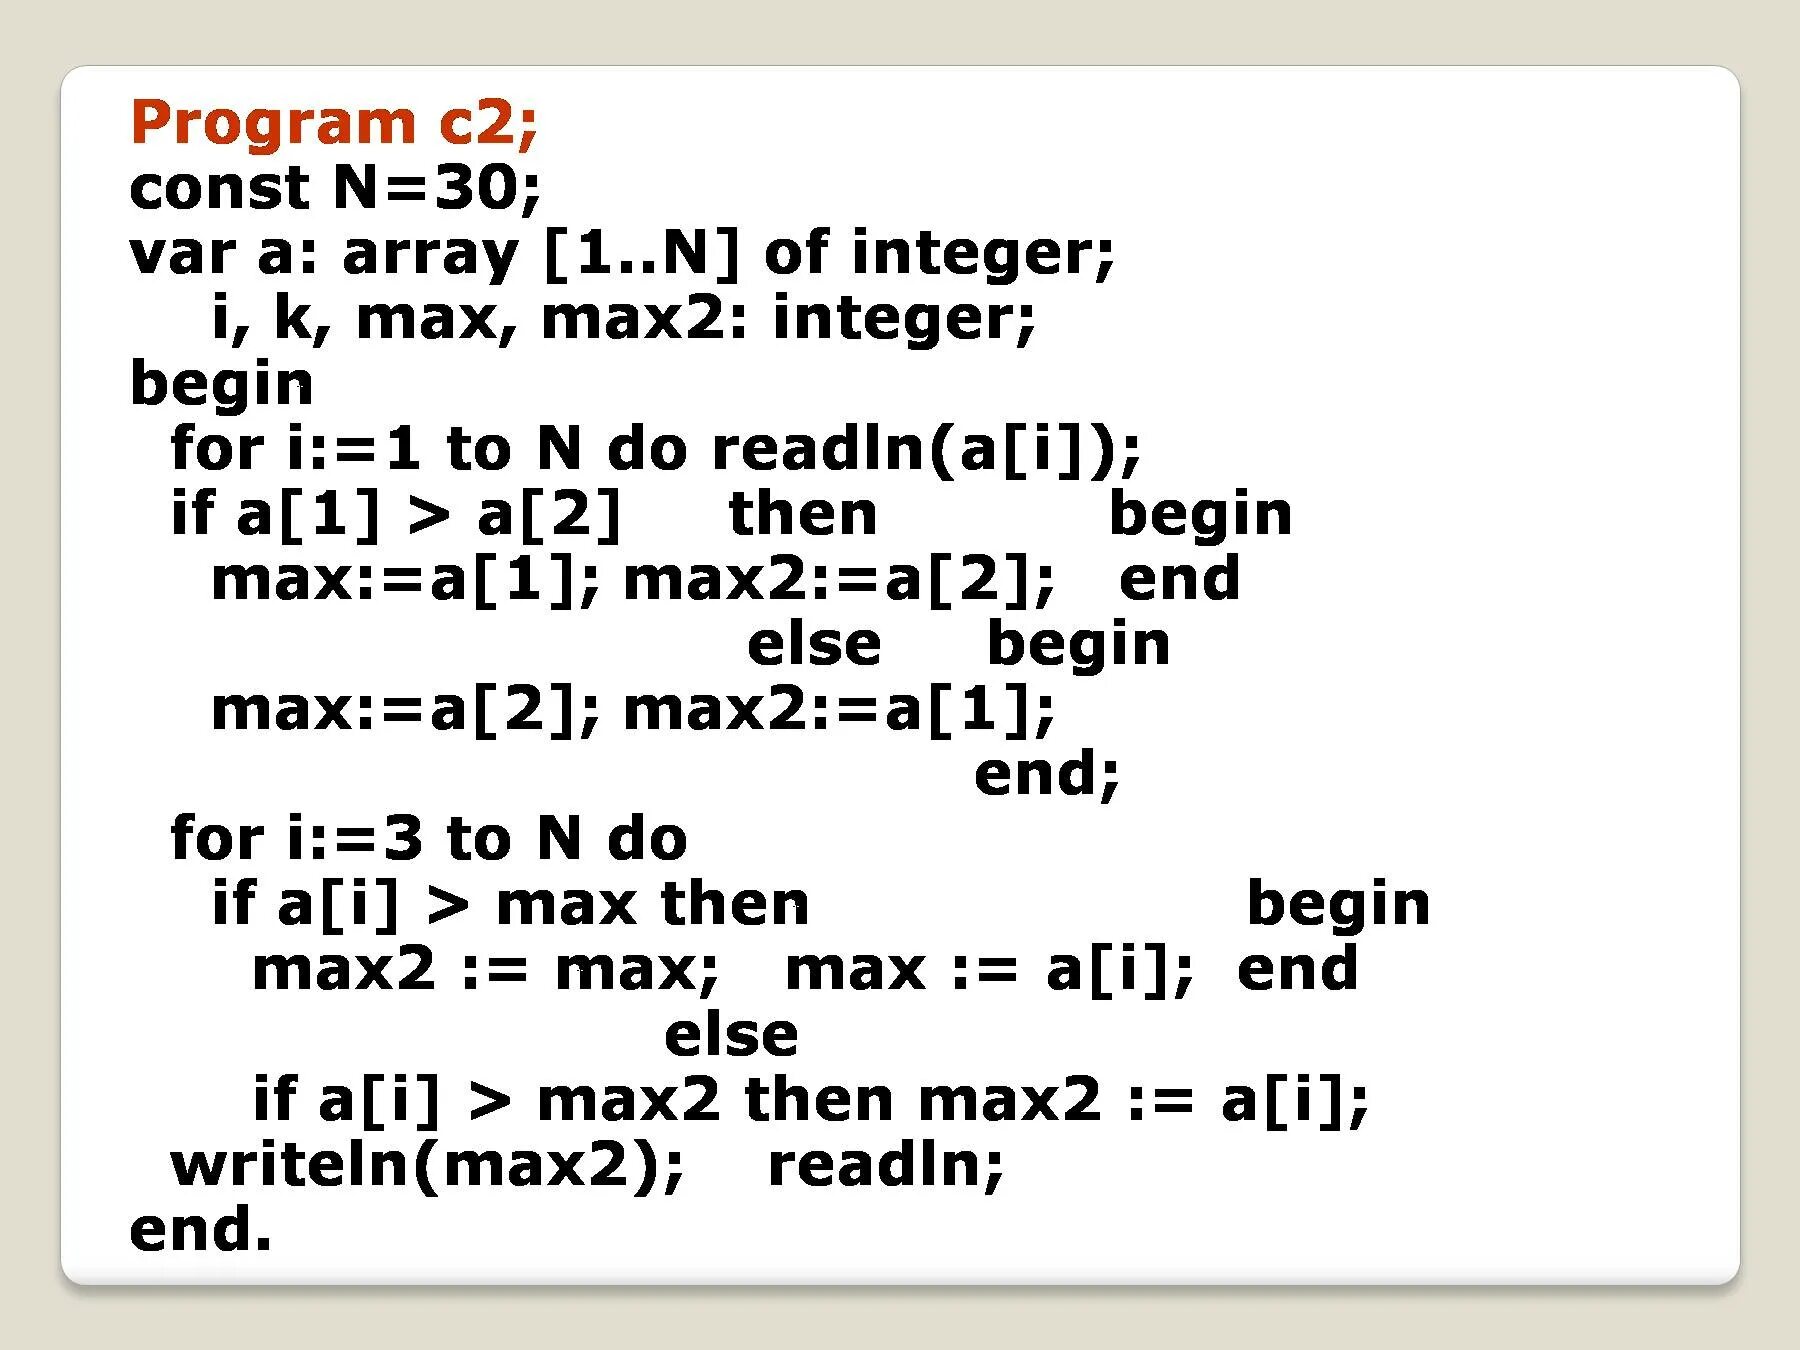 Program const var begin end.. Var a array 1 n of integer. Program Max var a. A : array [1..n] of integer. Max programming